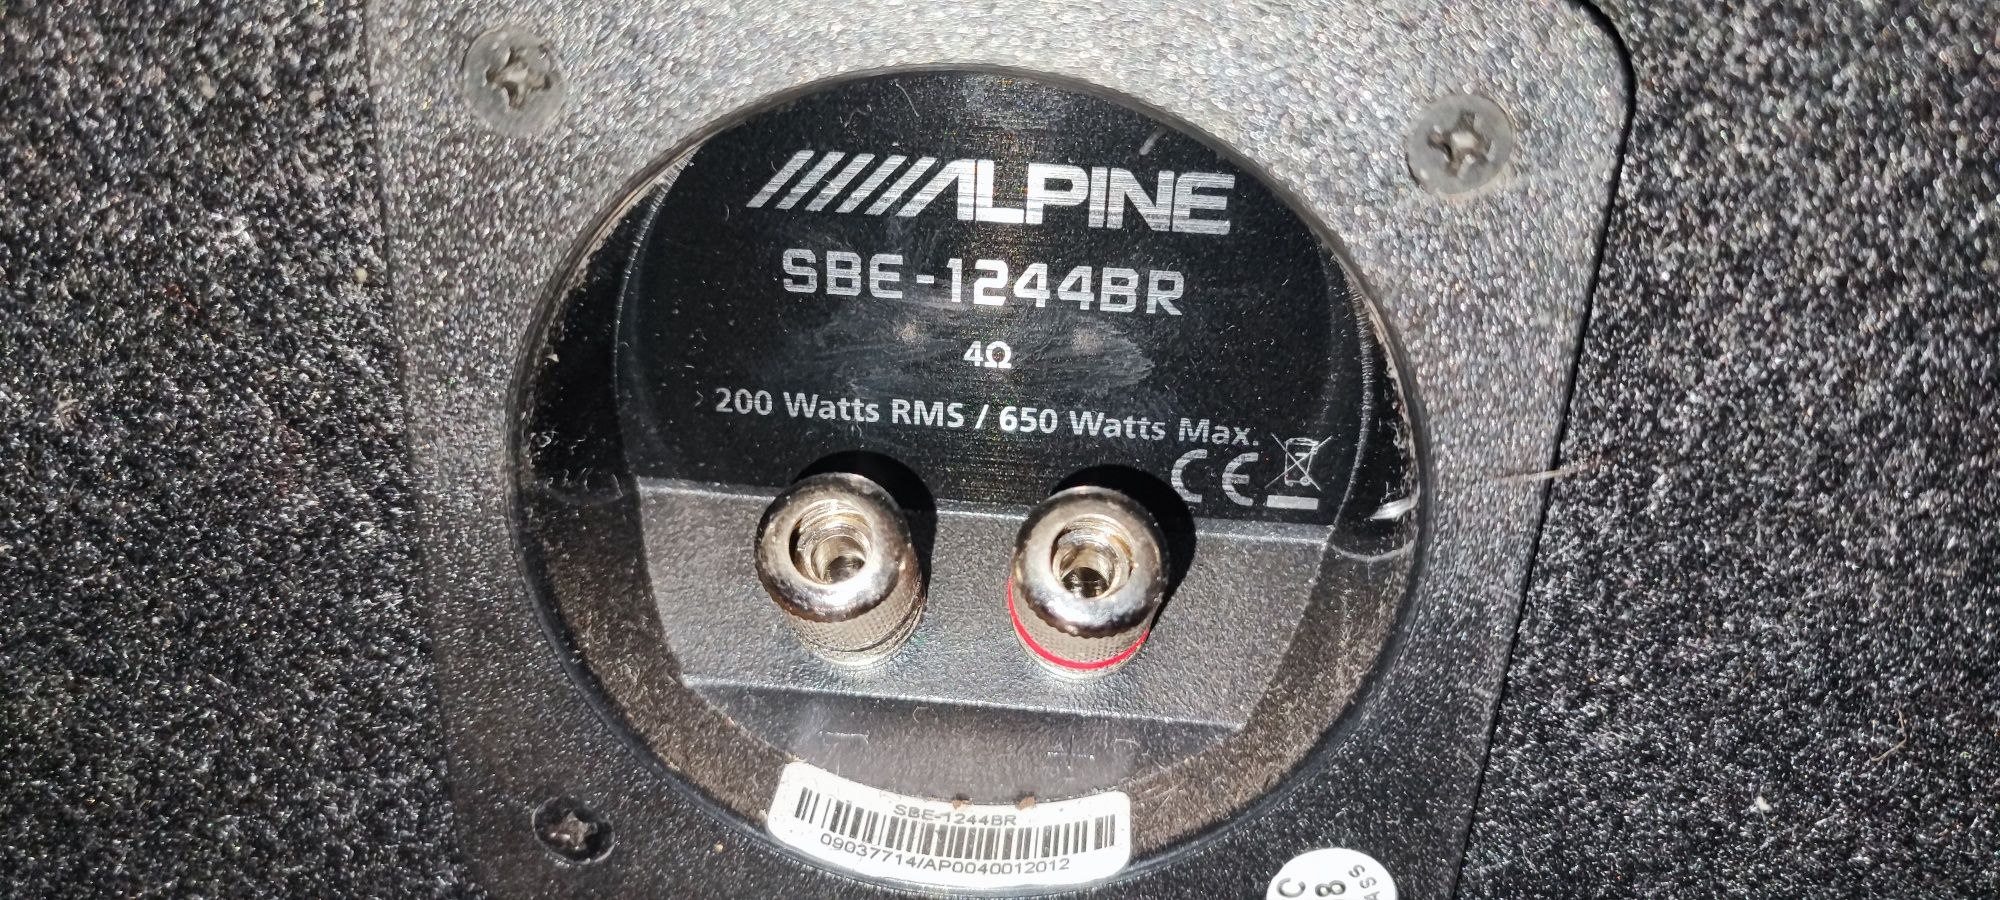 Сабвуфер ( саб ) Alpine SBE 1244 BR